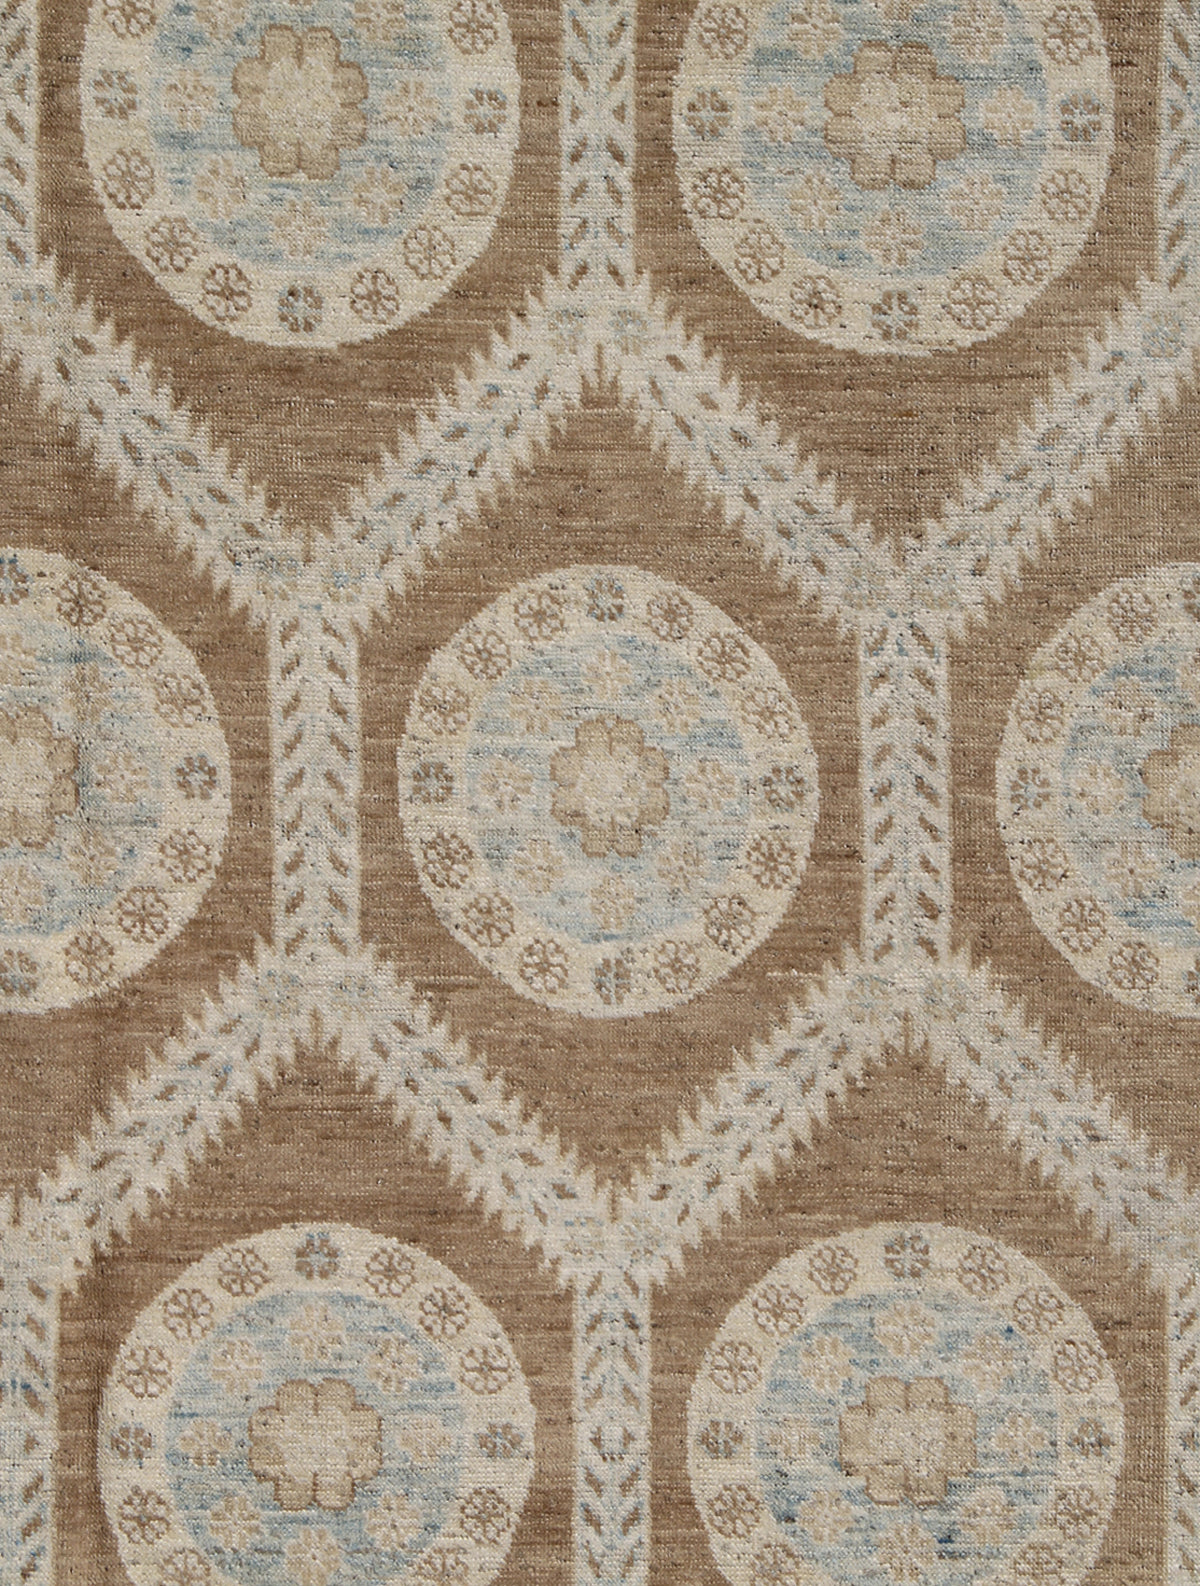 12'x9' Ariana Traditional Geometric Samarkand Design Rug